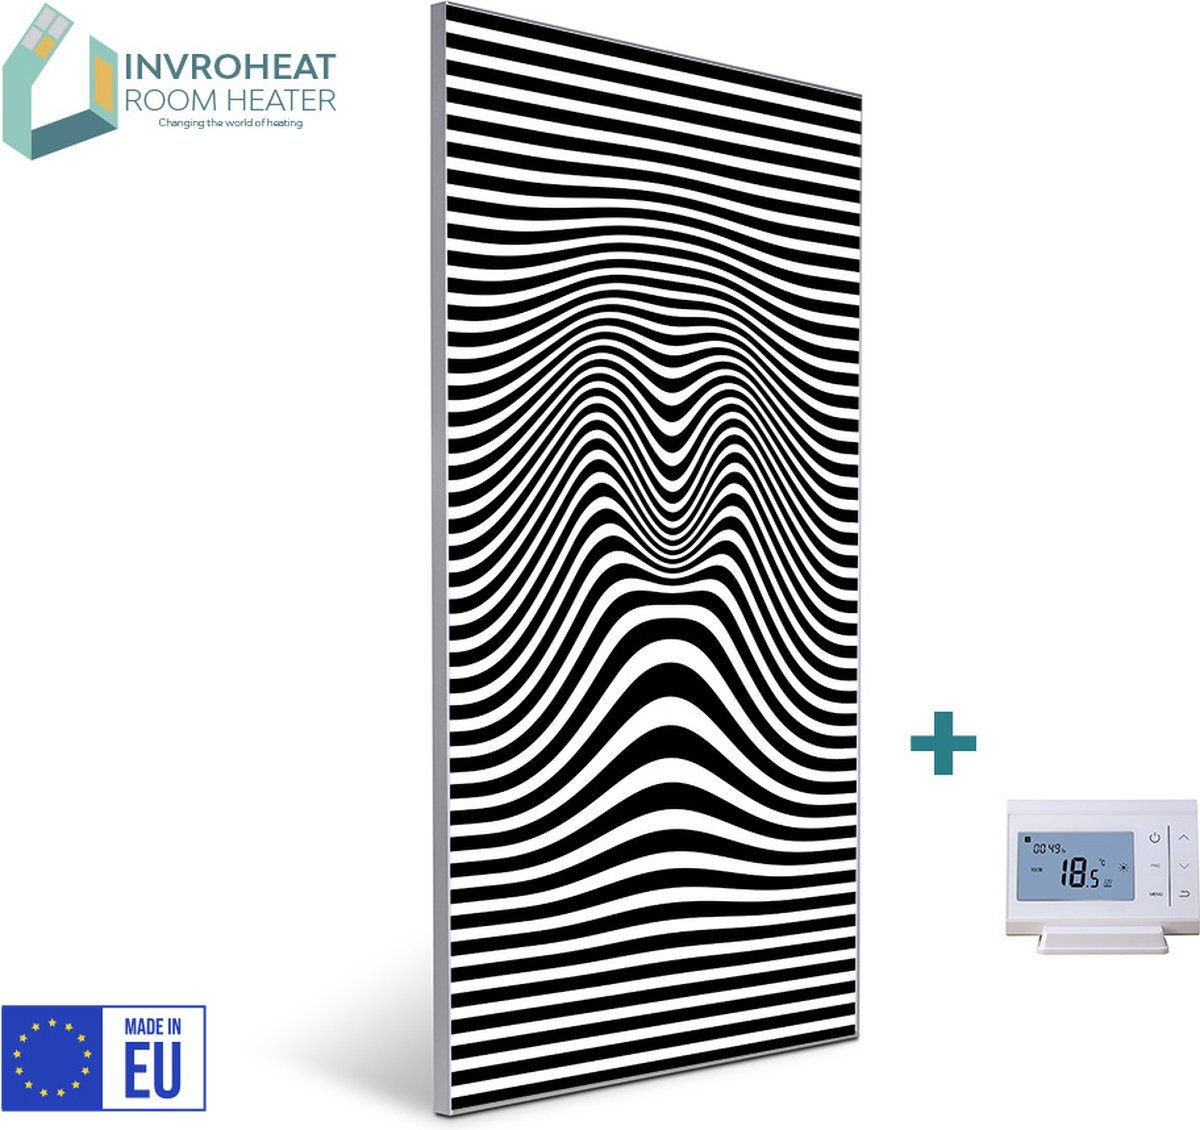 NIEUW: Invroheat infrarood verwarmingspaneel Black and White - 800W - 61x91.5cm - Afbeelding verwisselbaar - met thermostaat en afstandsbediening